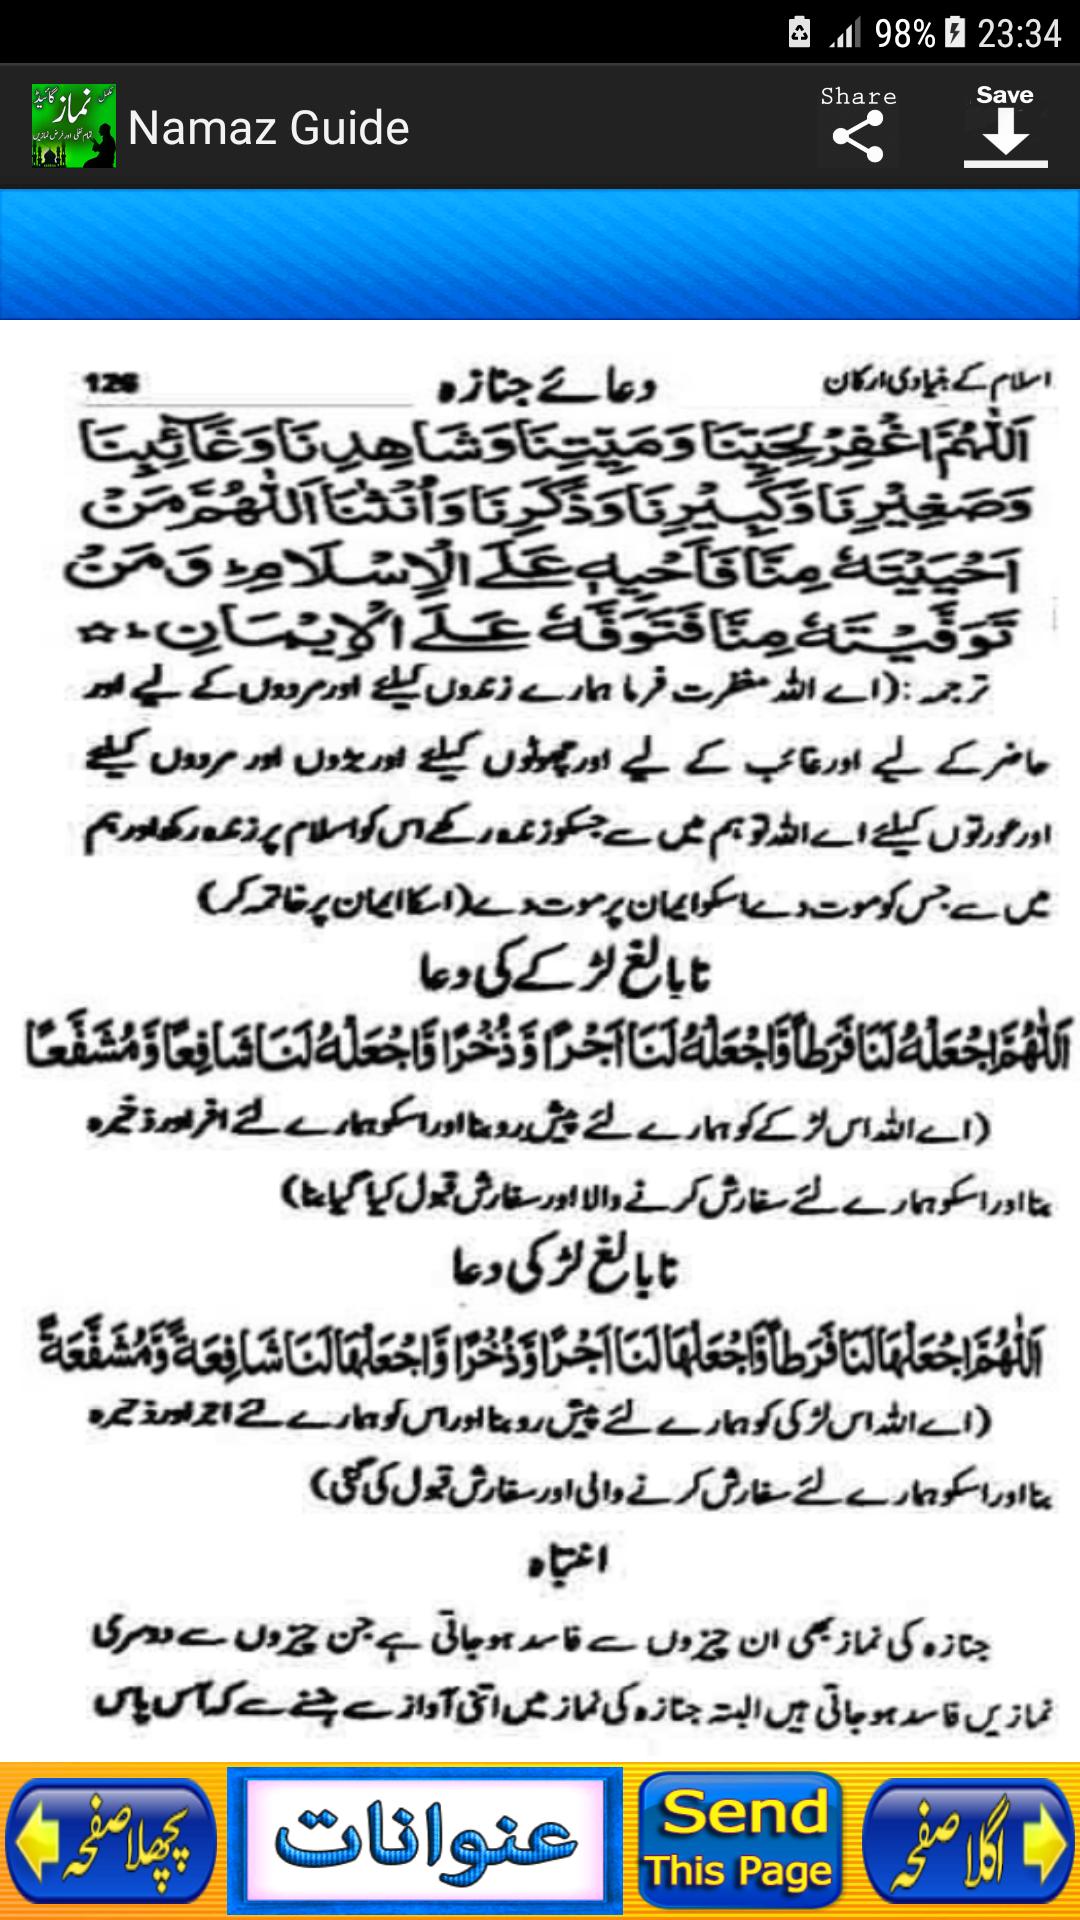 Namaz ka tarika Urdu Complete for Android - APK Download